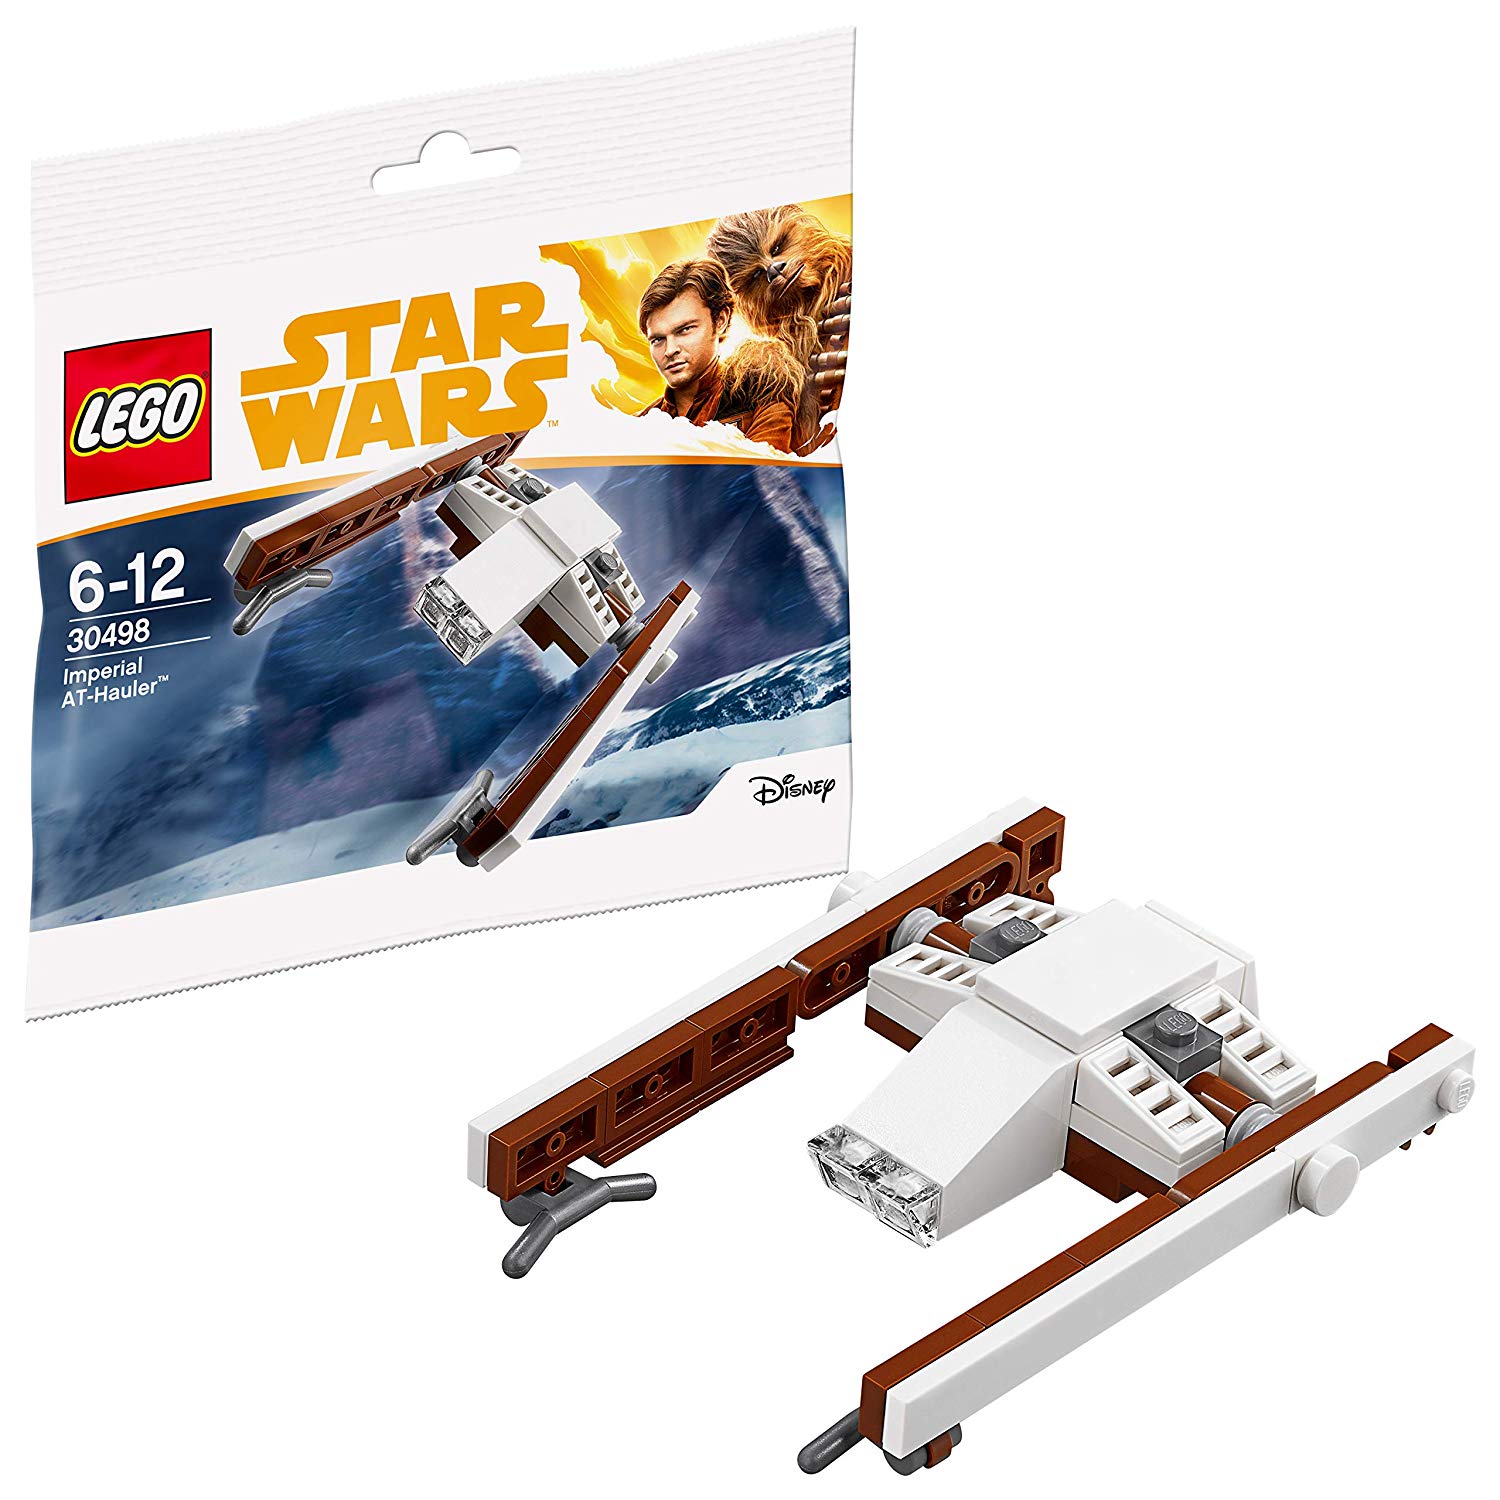 Lego Star Wars 30498 Imperial At-Hauler